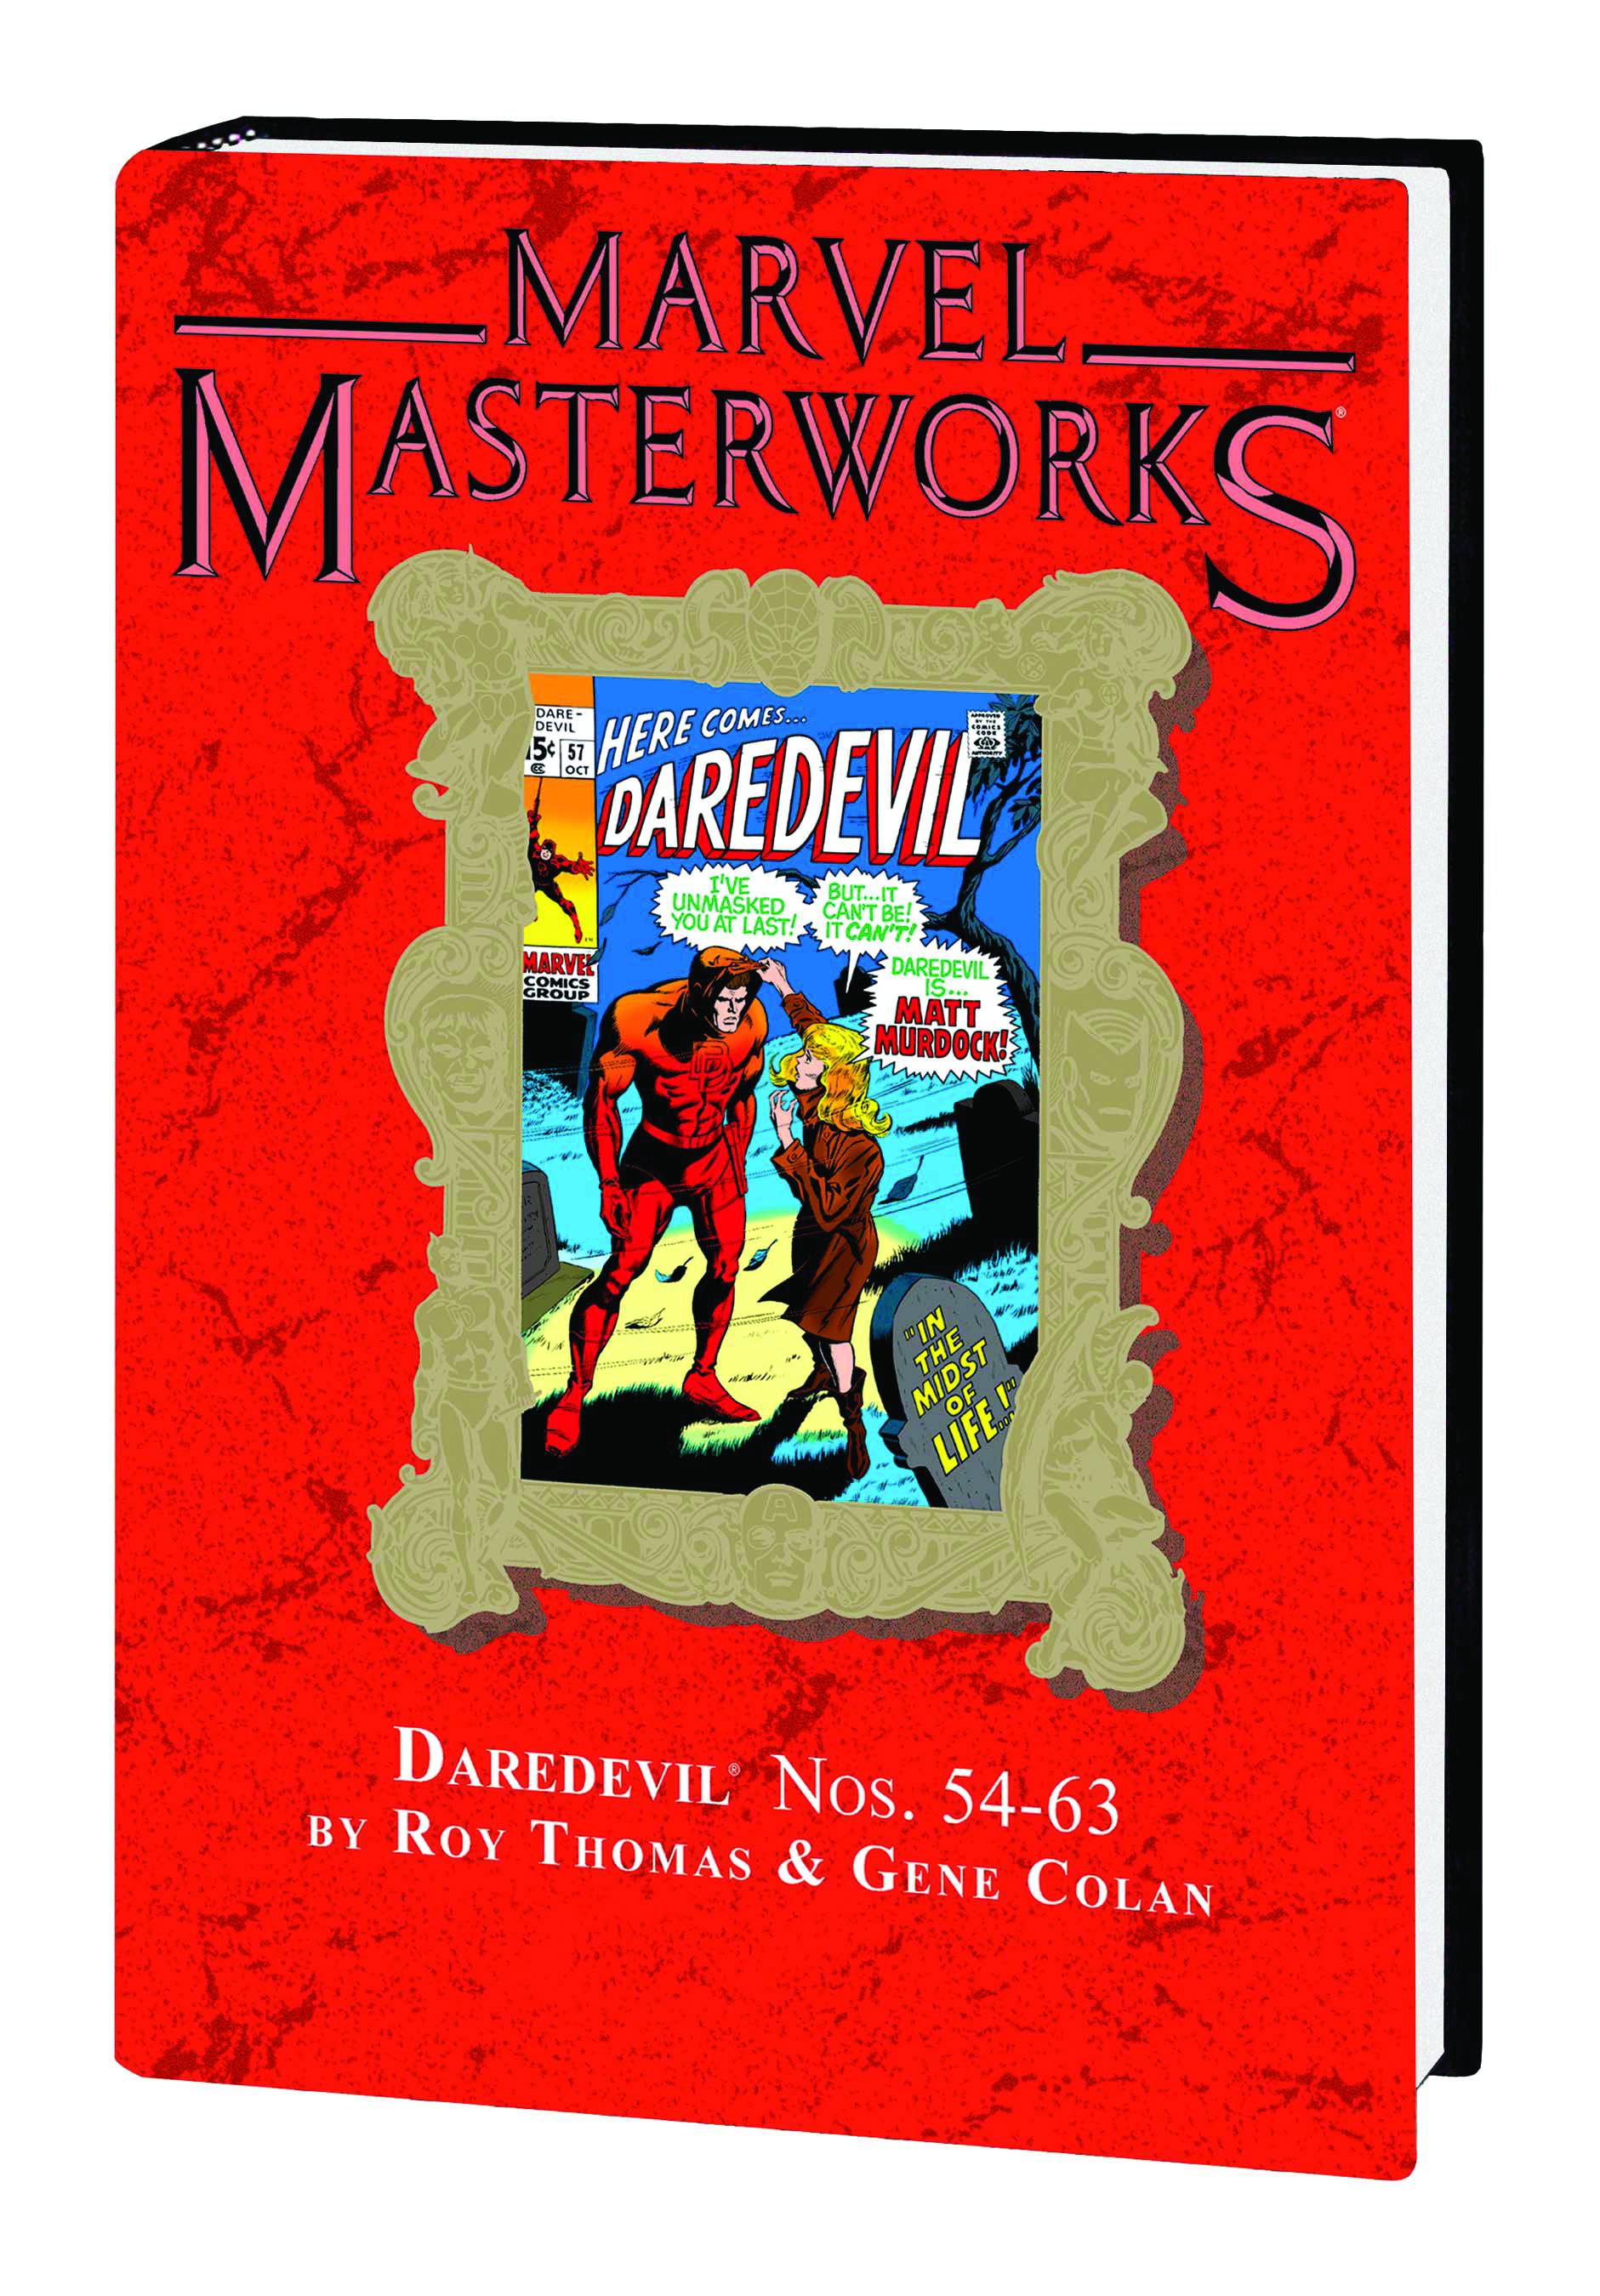 Marvel Masterworks Daredevil Hardcover Volume 6 Direct Market Edition